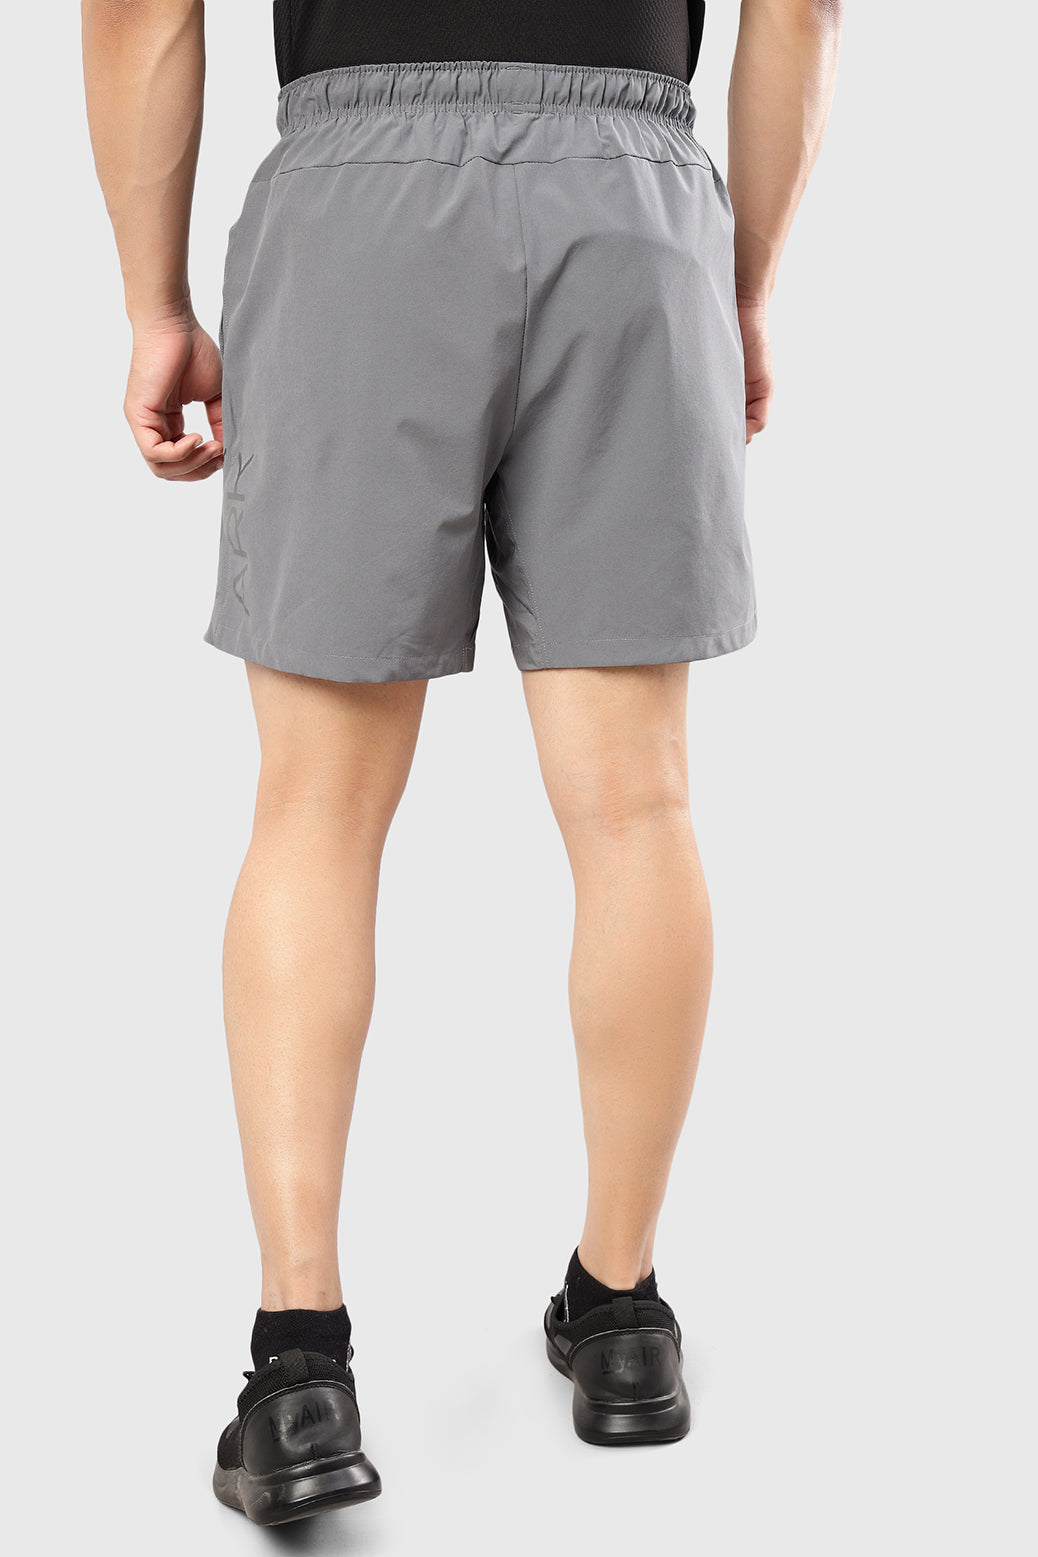 Swift Shorts Grey